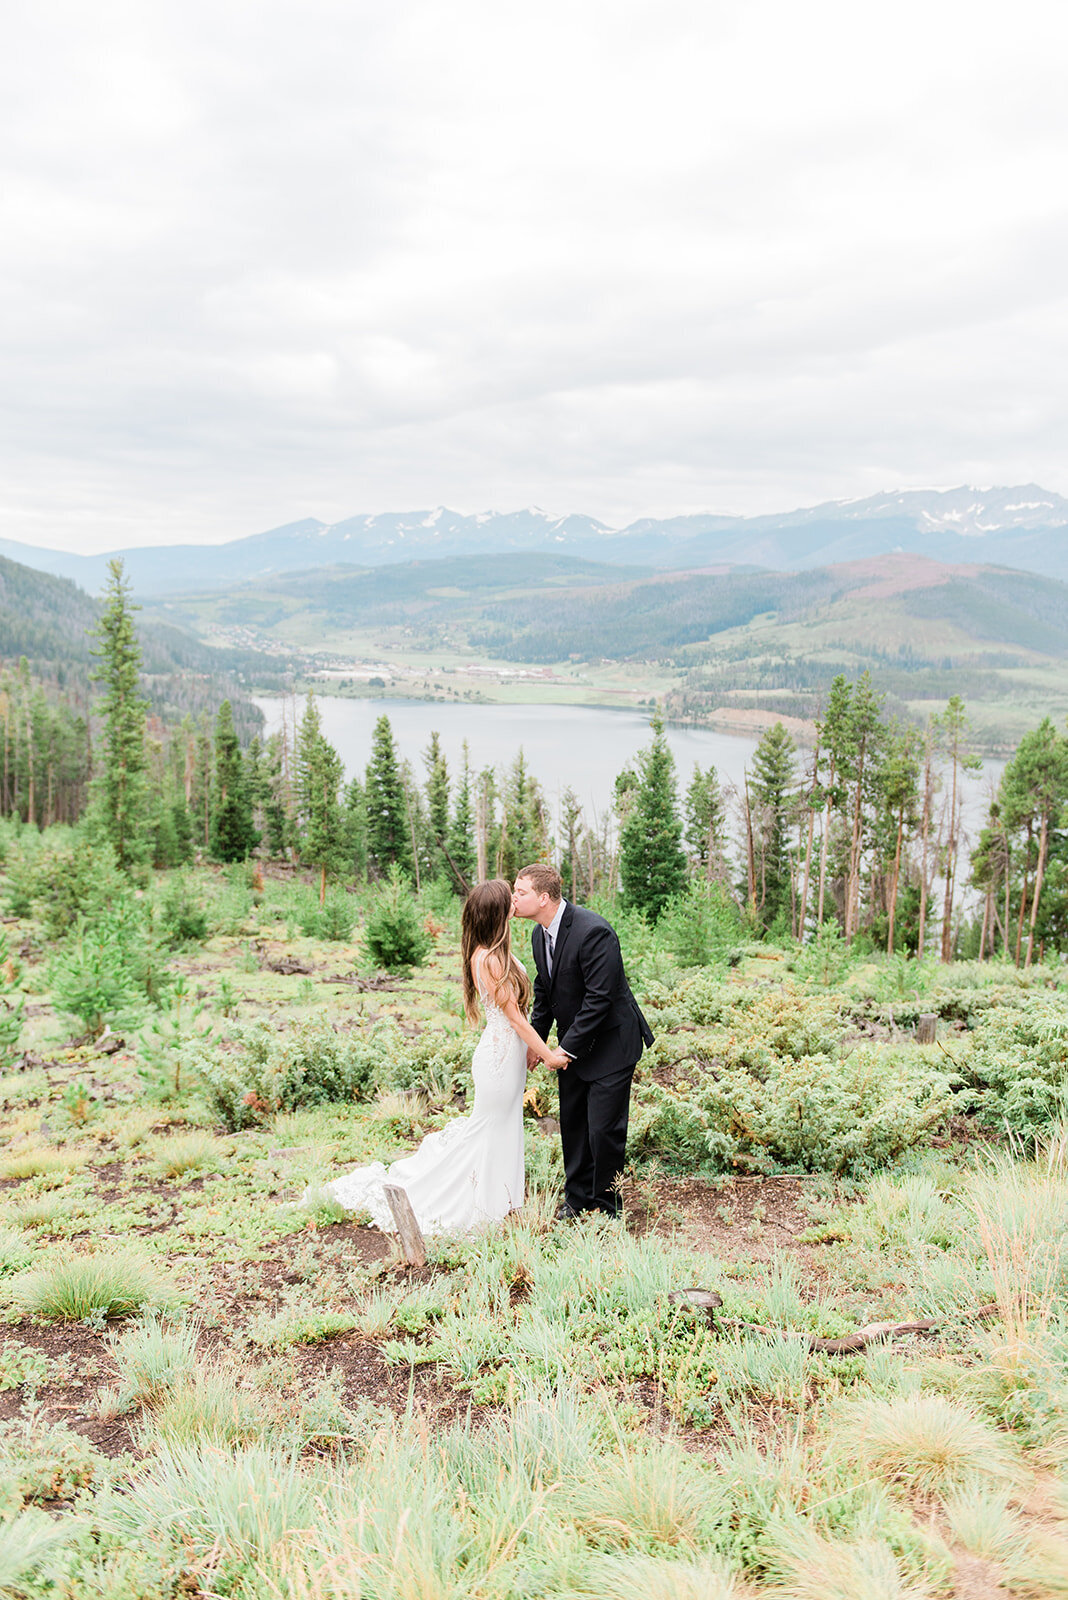 Colorado Wedding Planning Advice - Sapphire Celebrations